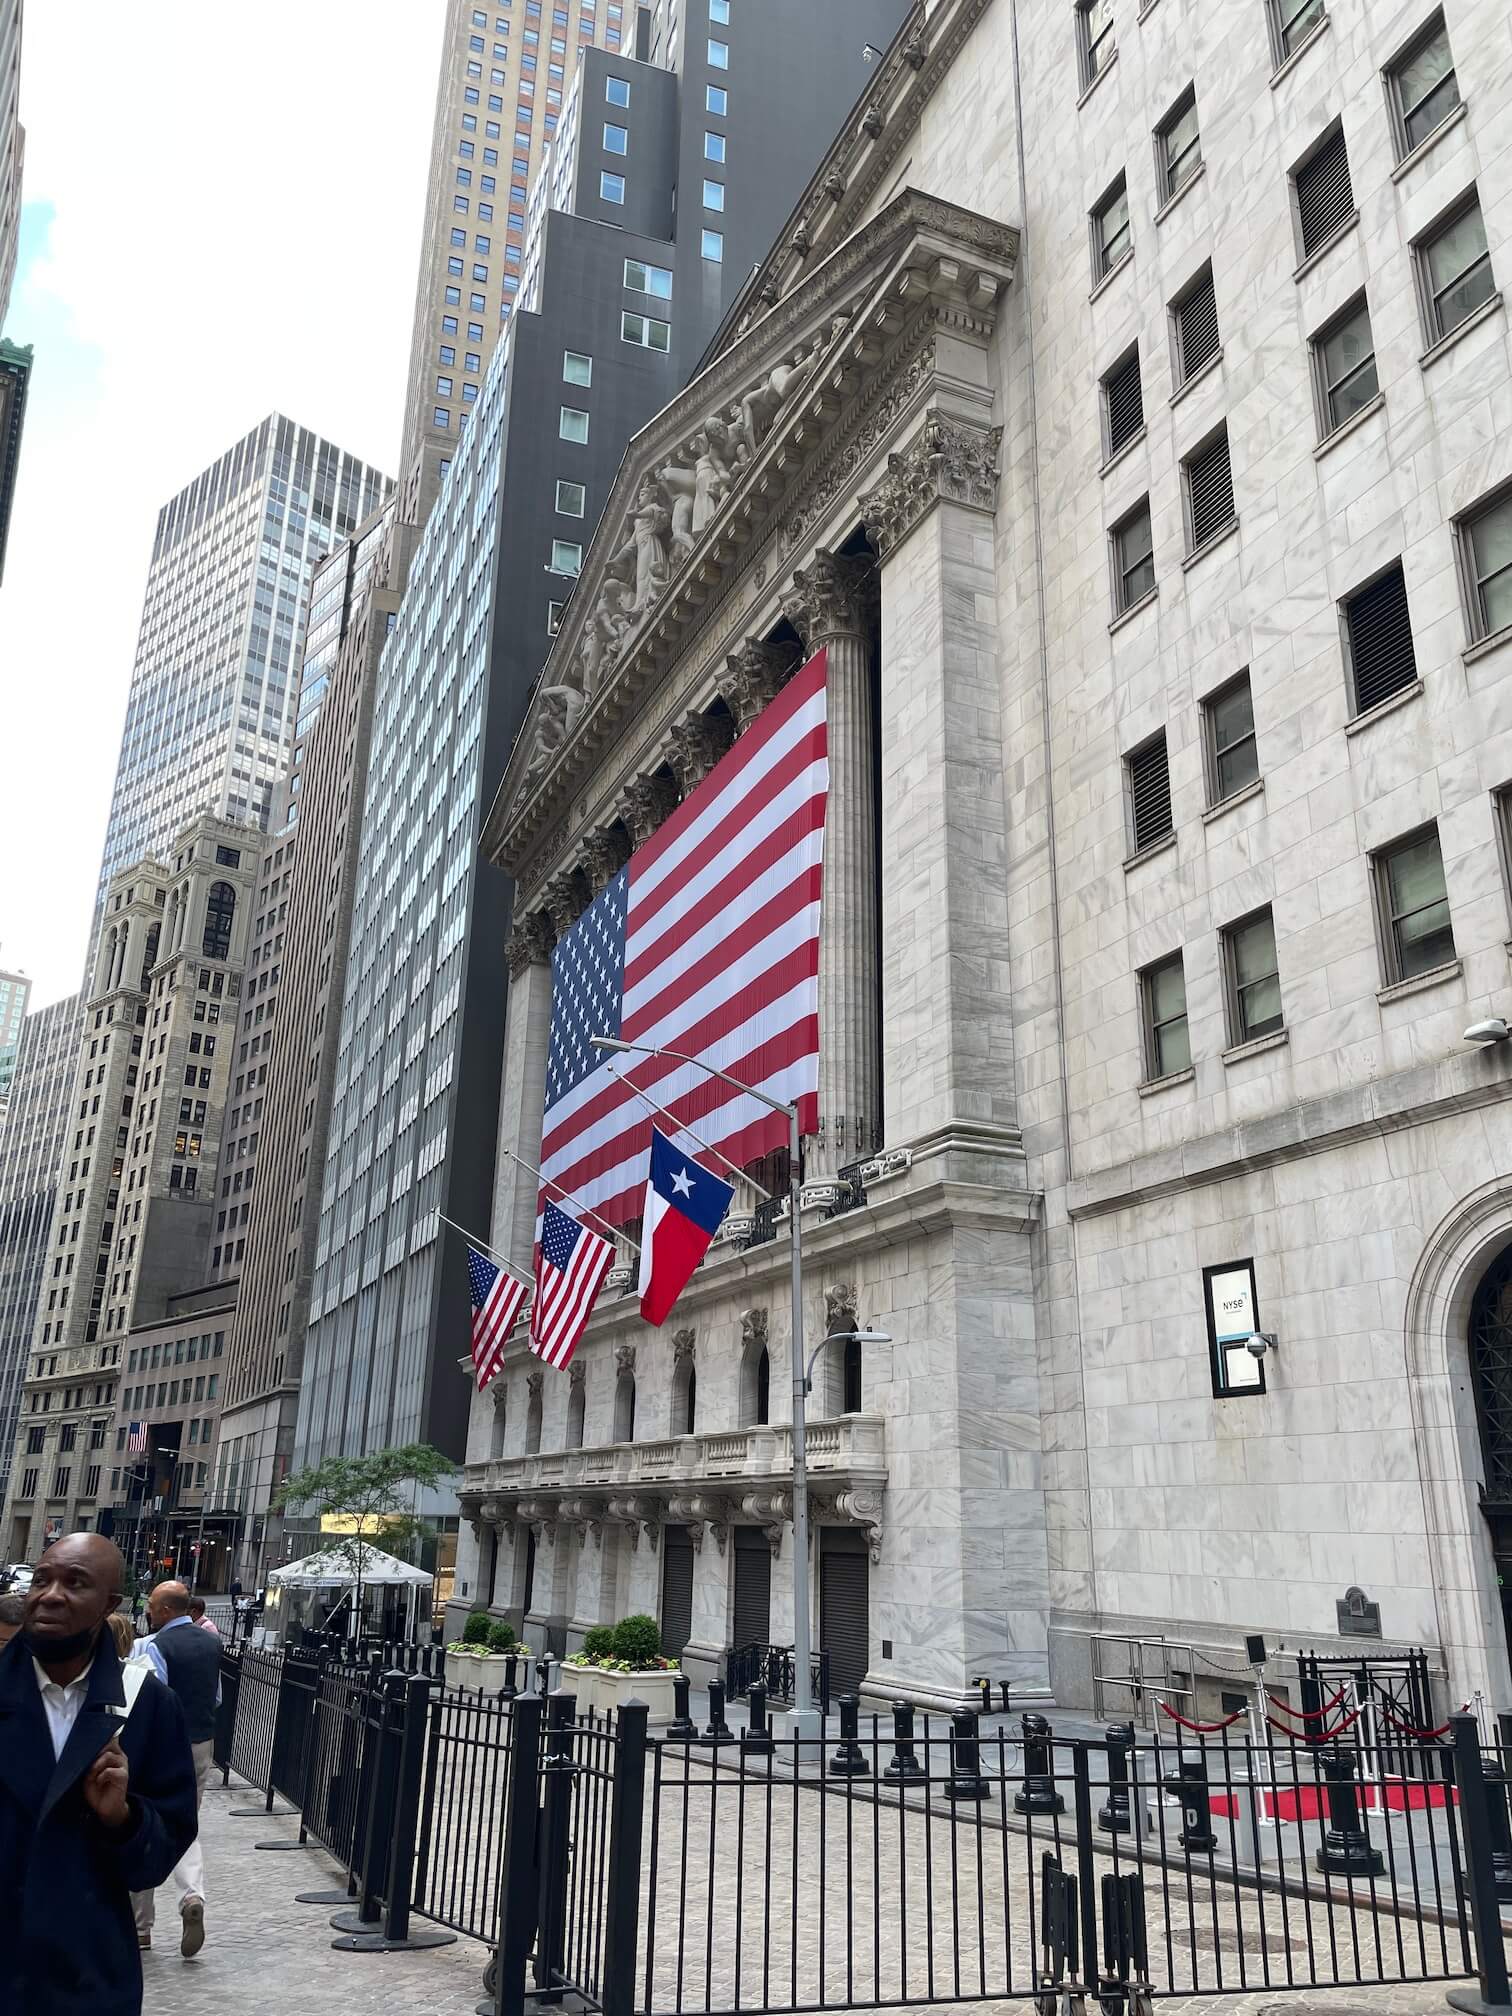 The Wall Street NYC